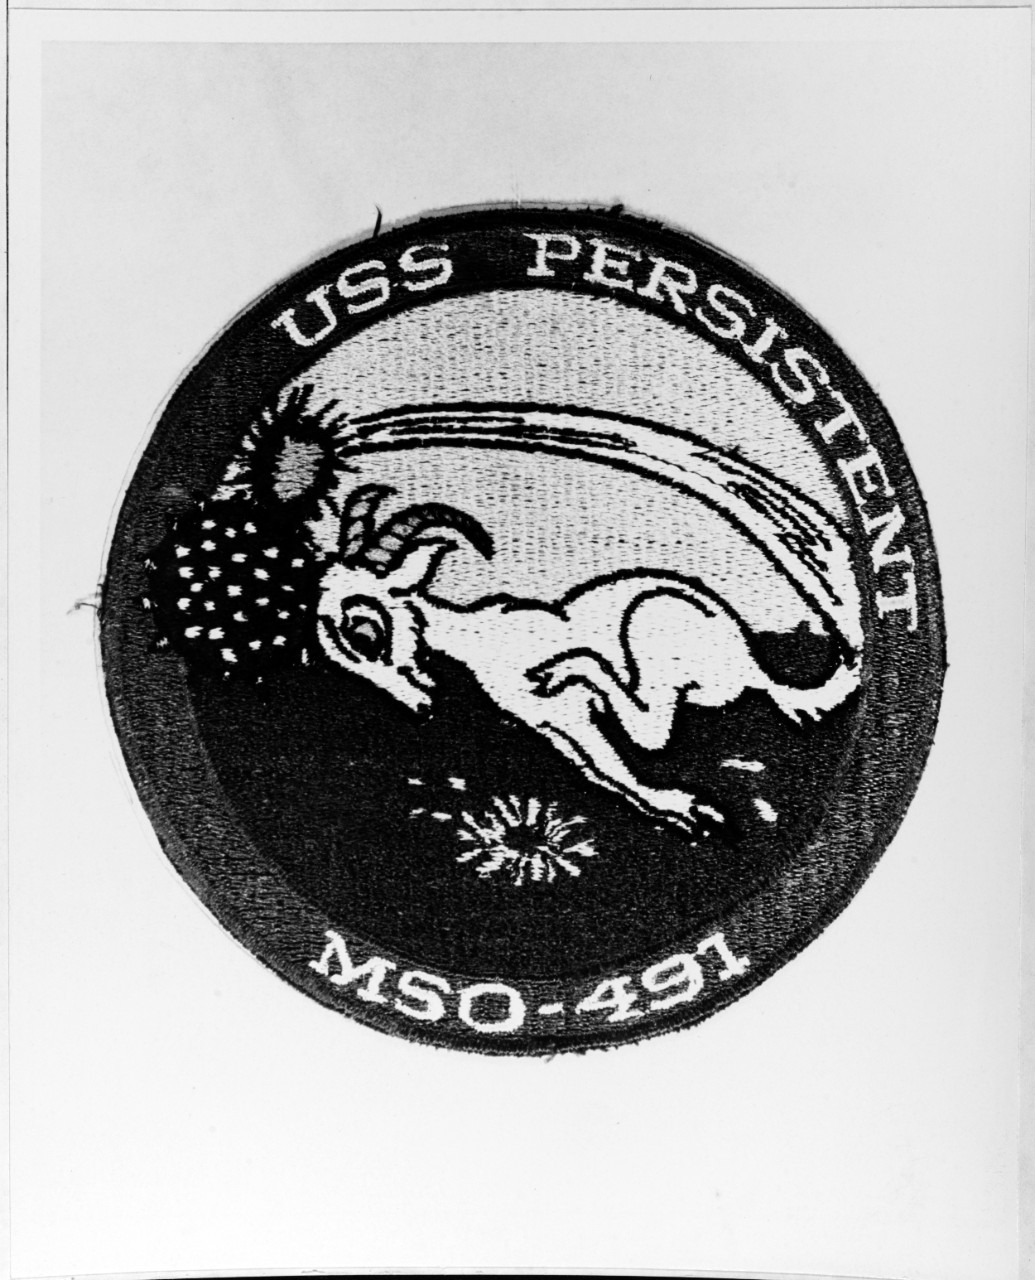 Insignia: USS PERSISTENT (MSO-491)